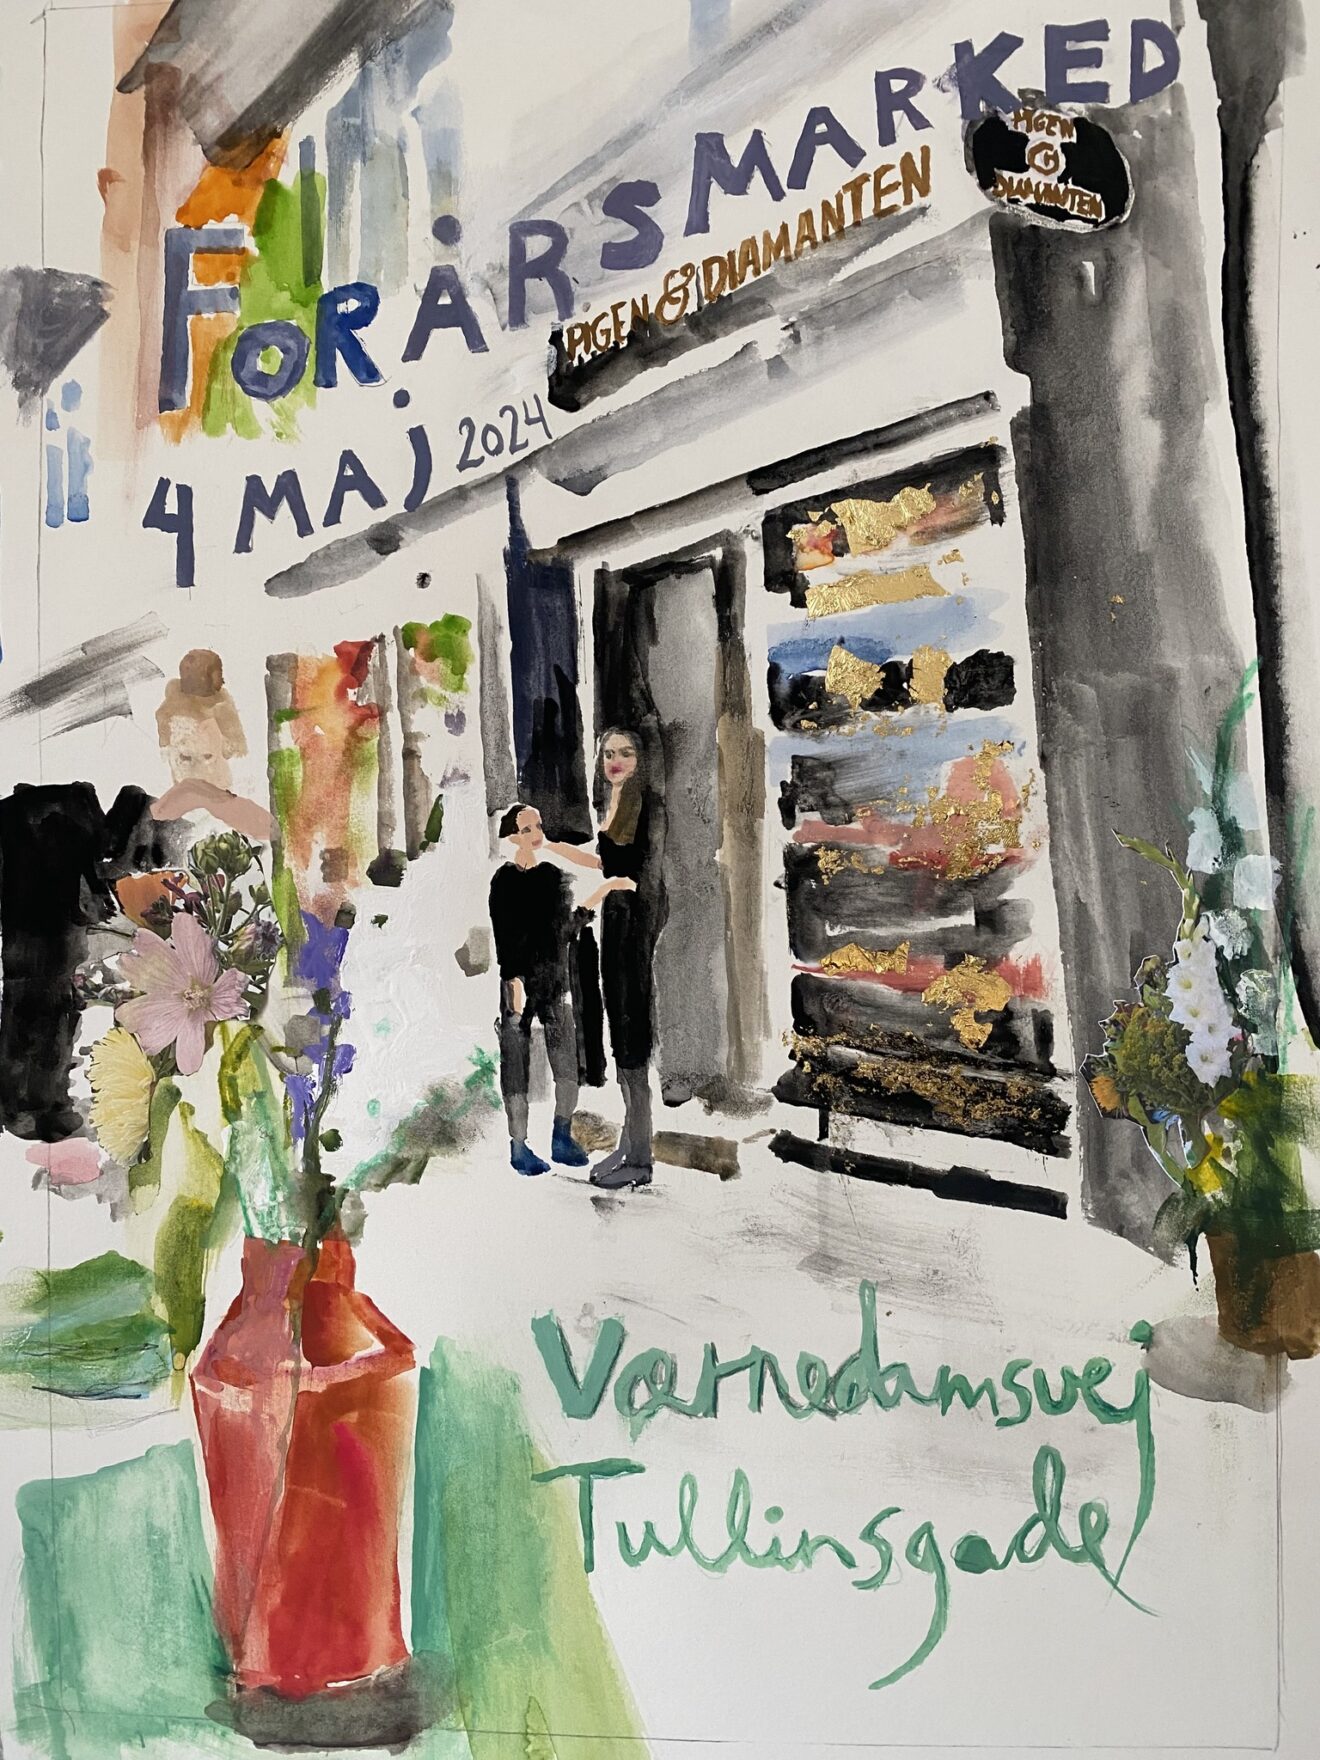 Forårsmarked på Værnedamsvej / Tullinsgade